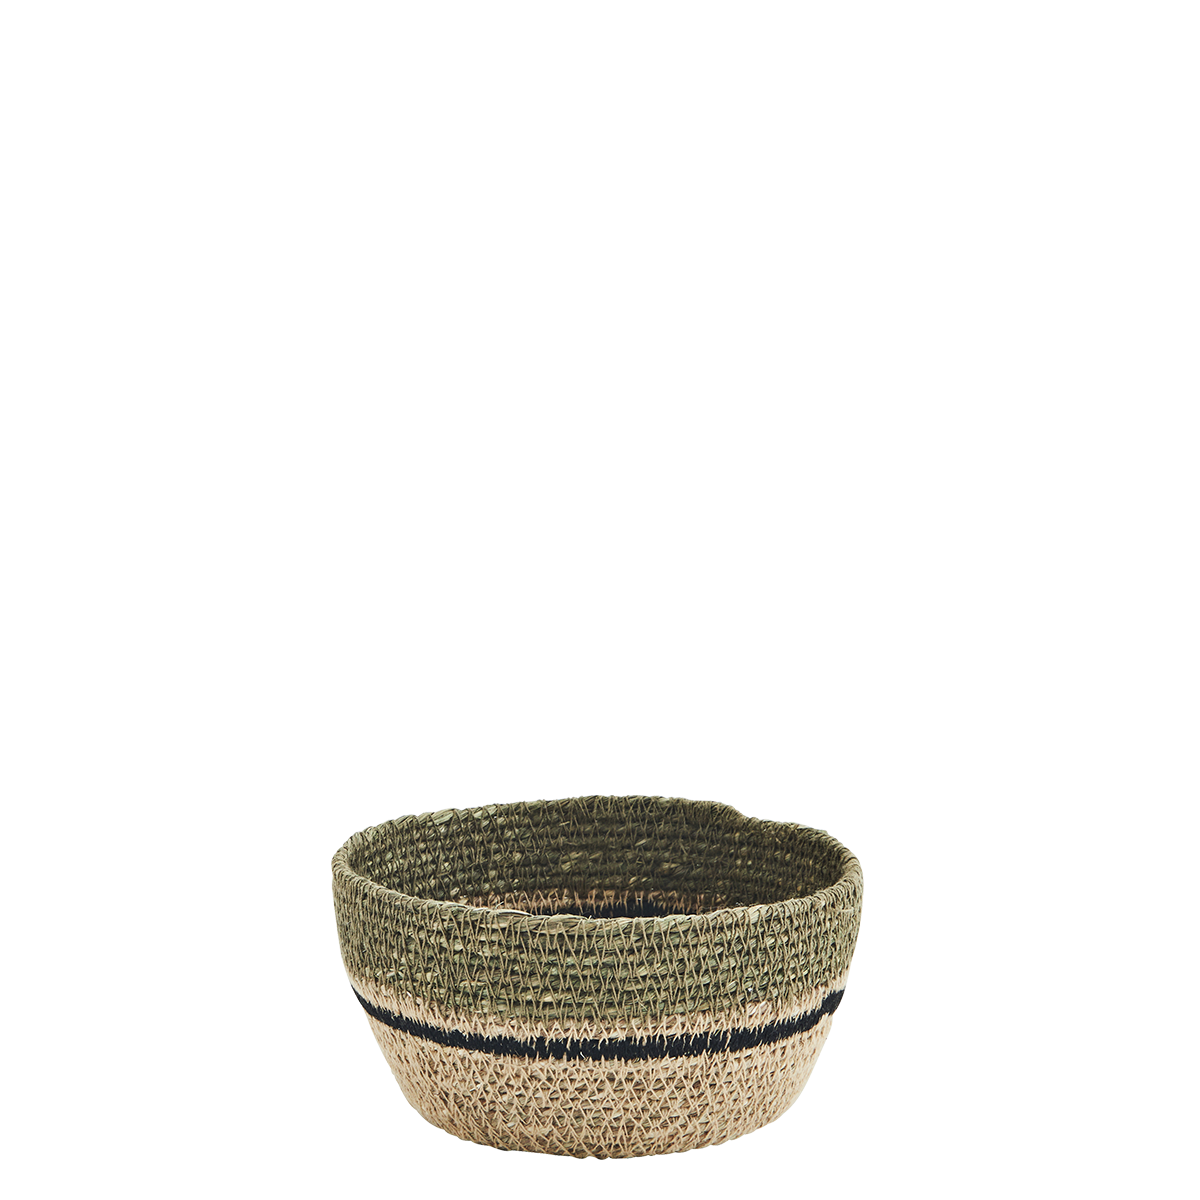 Seagrass bowl w/ stitching